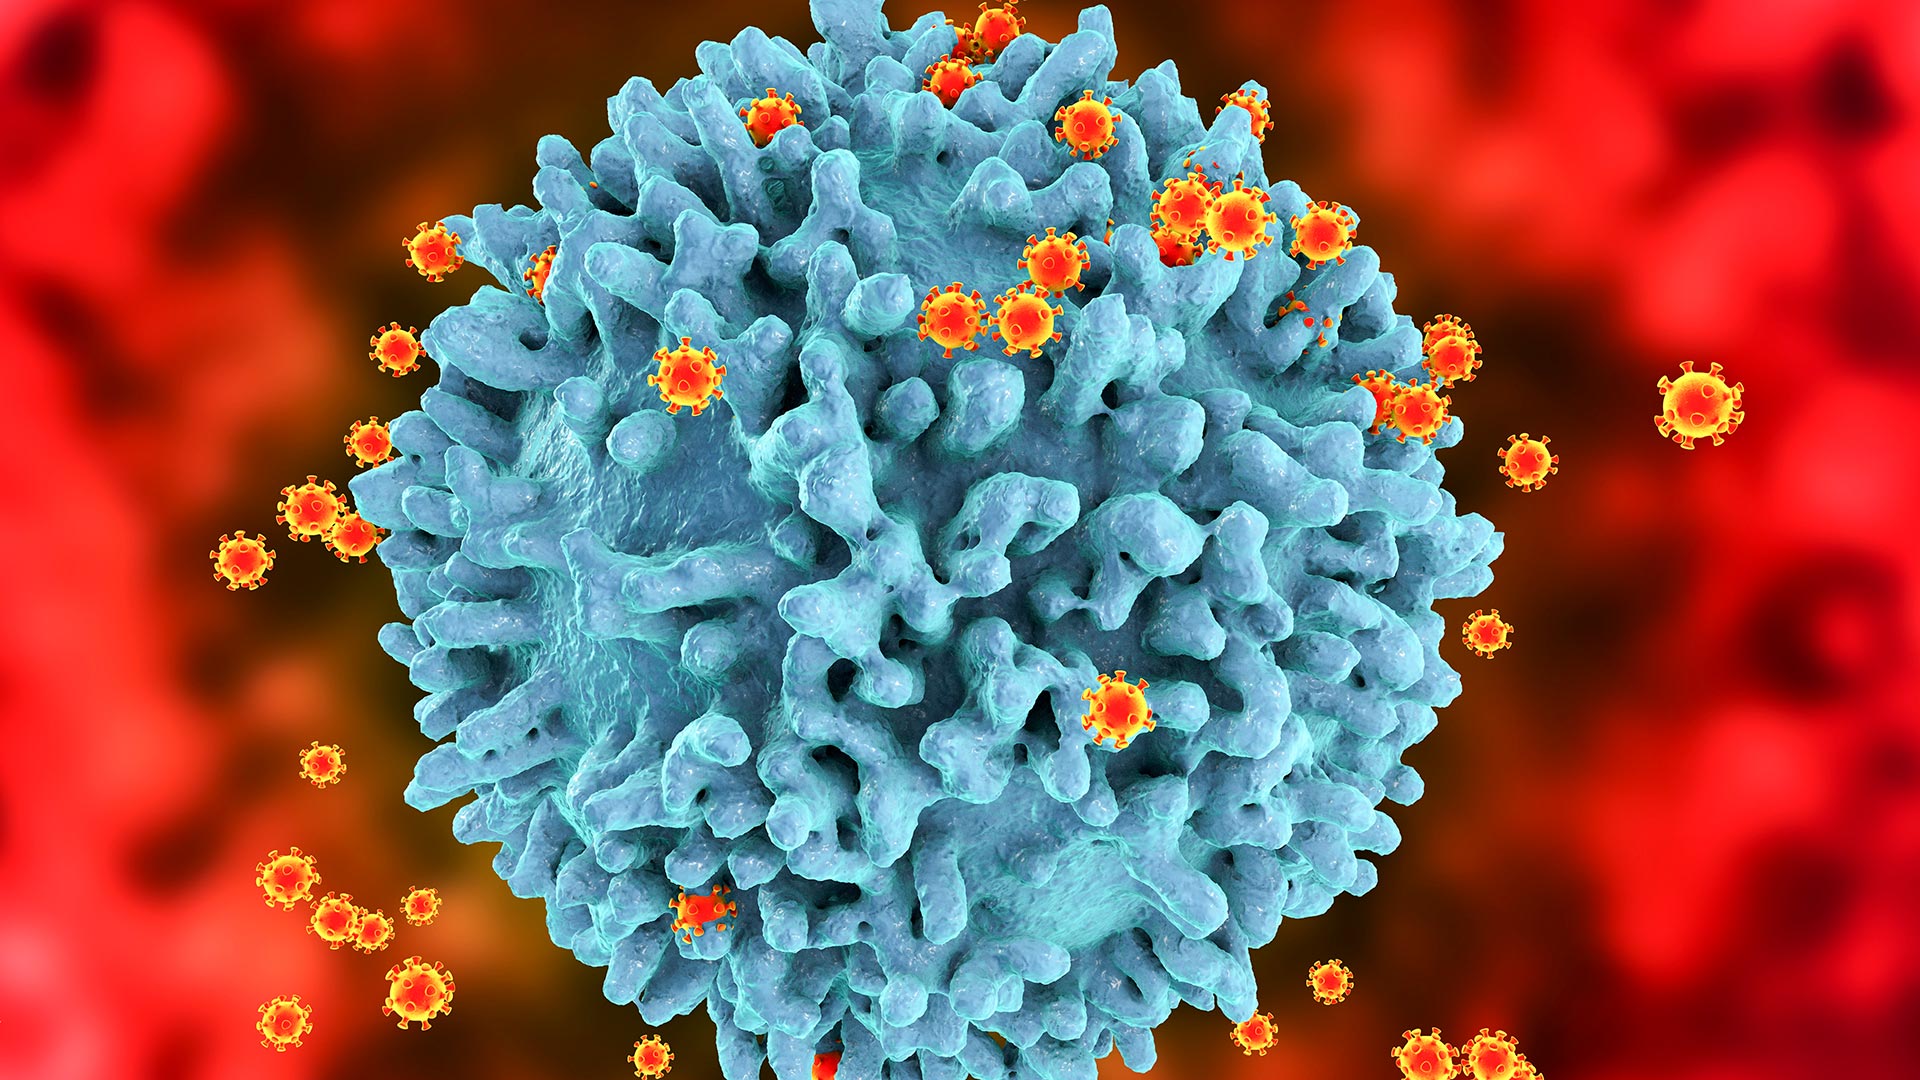 Chemokines as Drug Target for HIV-1